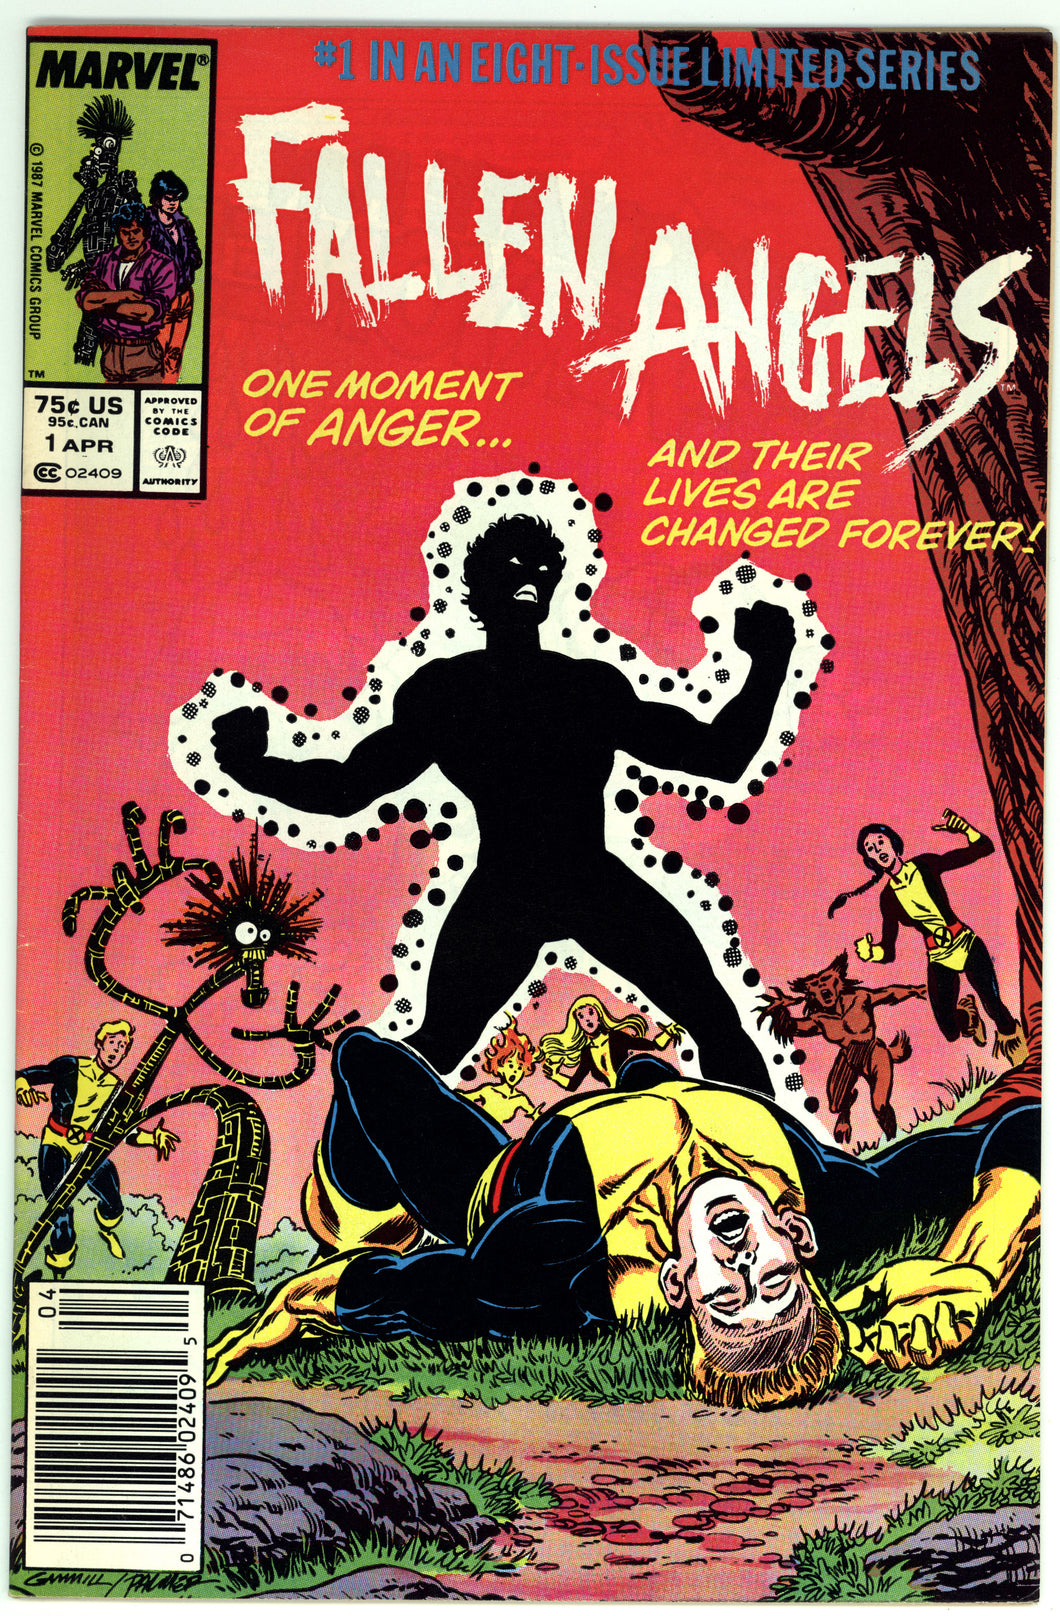 FALLEN ANGELS #1-8 COMPLETE SET (MARVEL 1987)